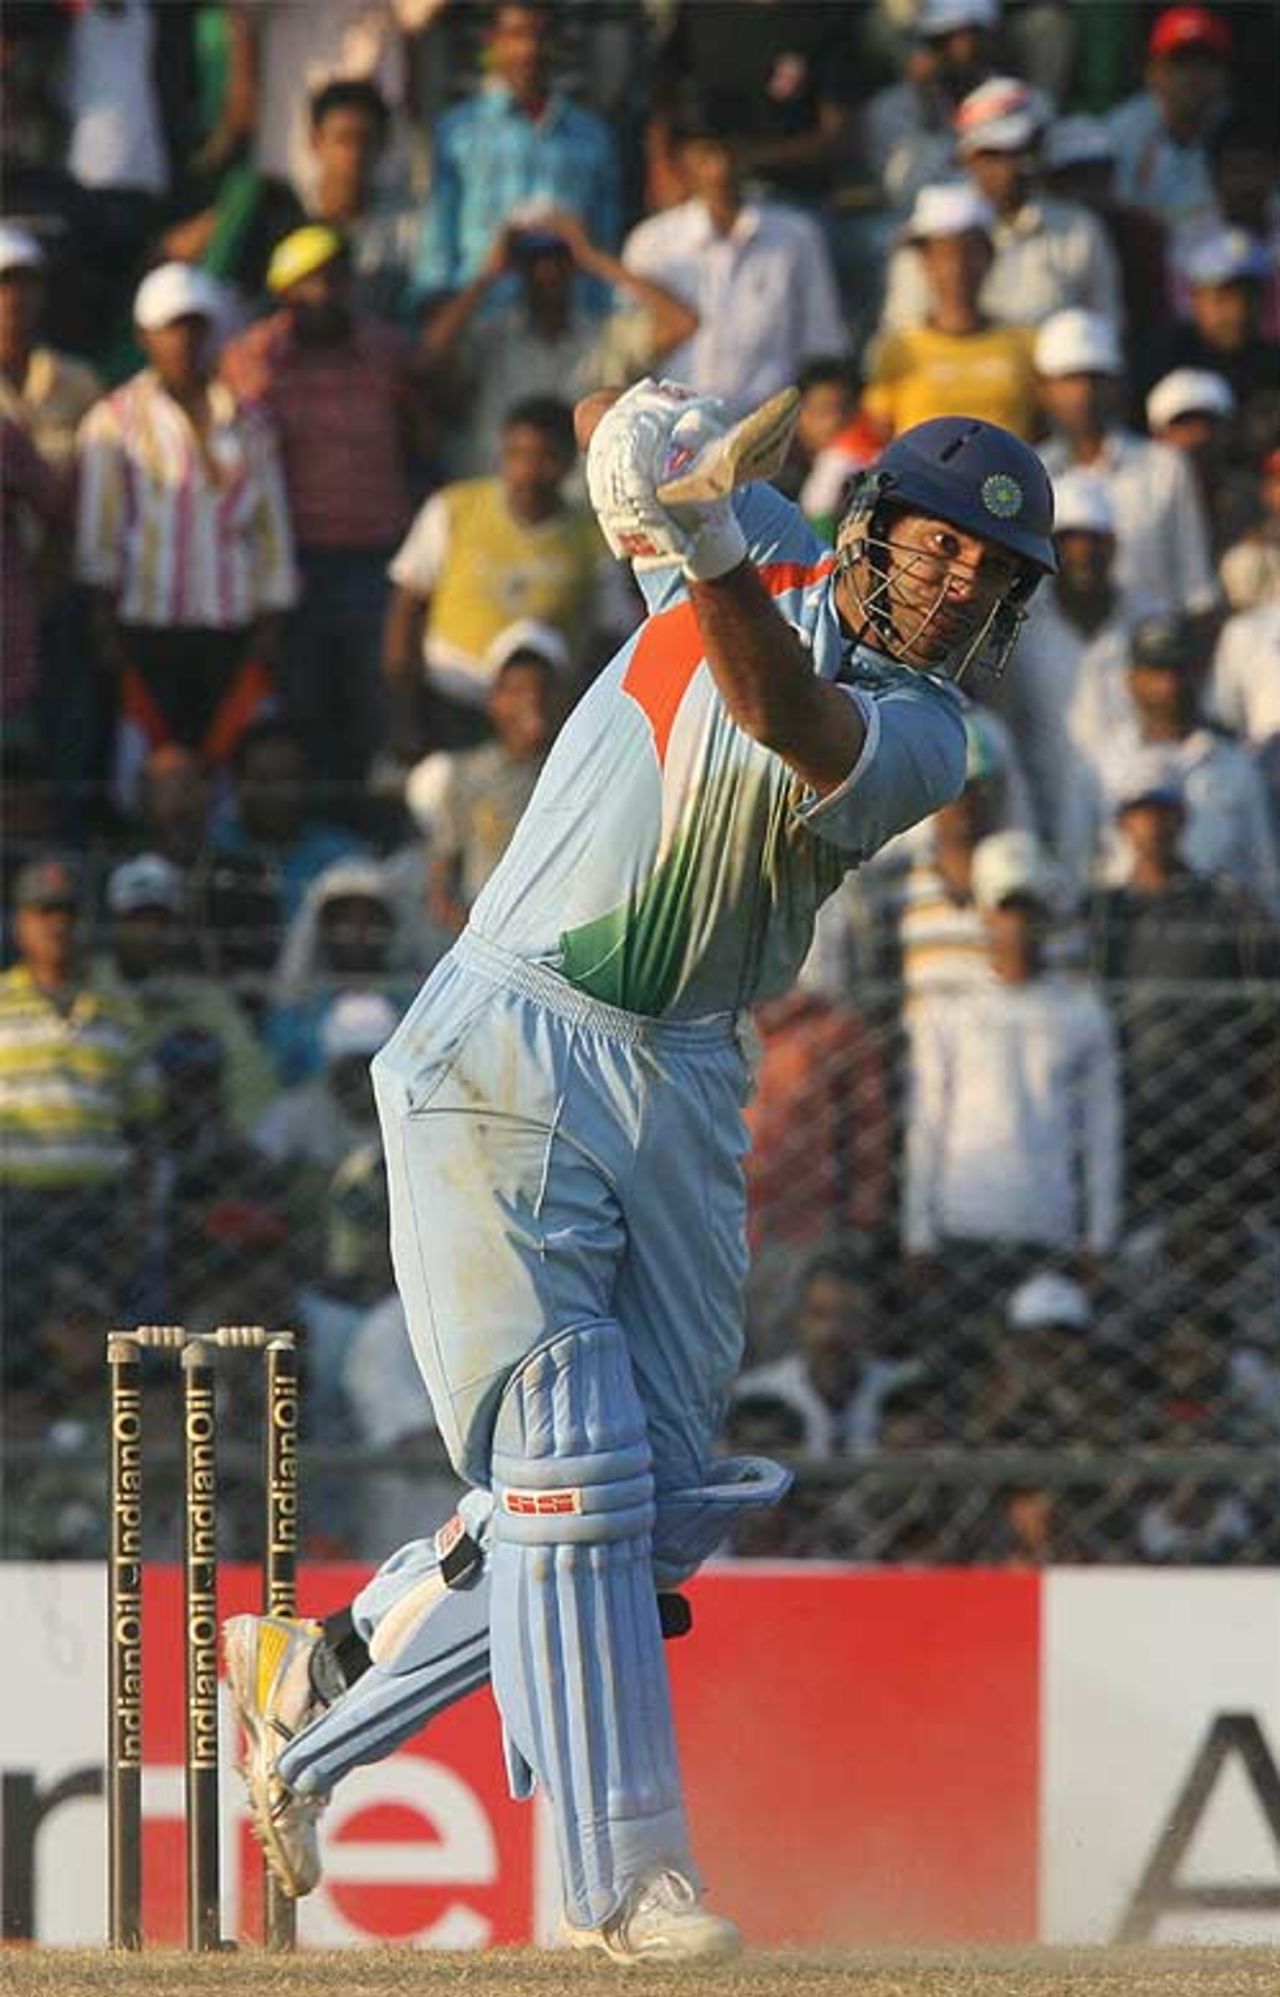 Yuvraj Singh hammers one straight down the ground, India v Pakistan, 1st ODI, Guwahati, November 5, 2007